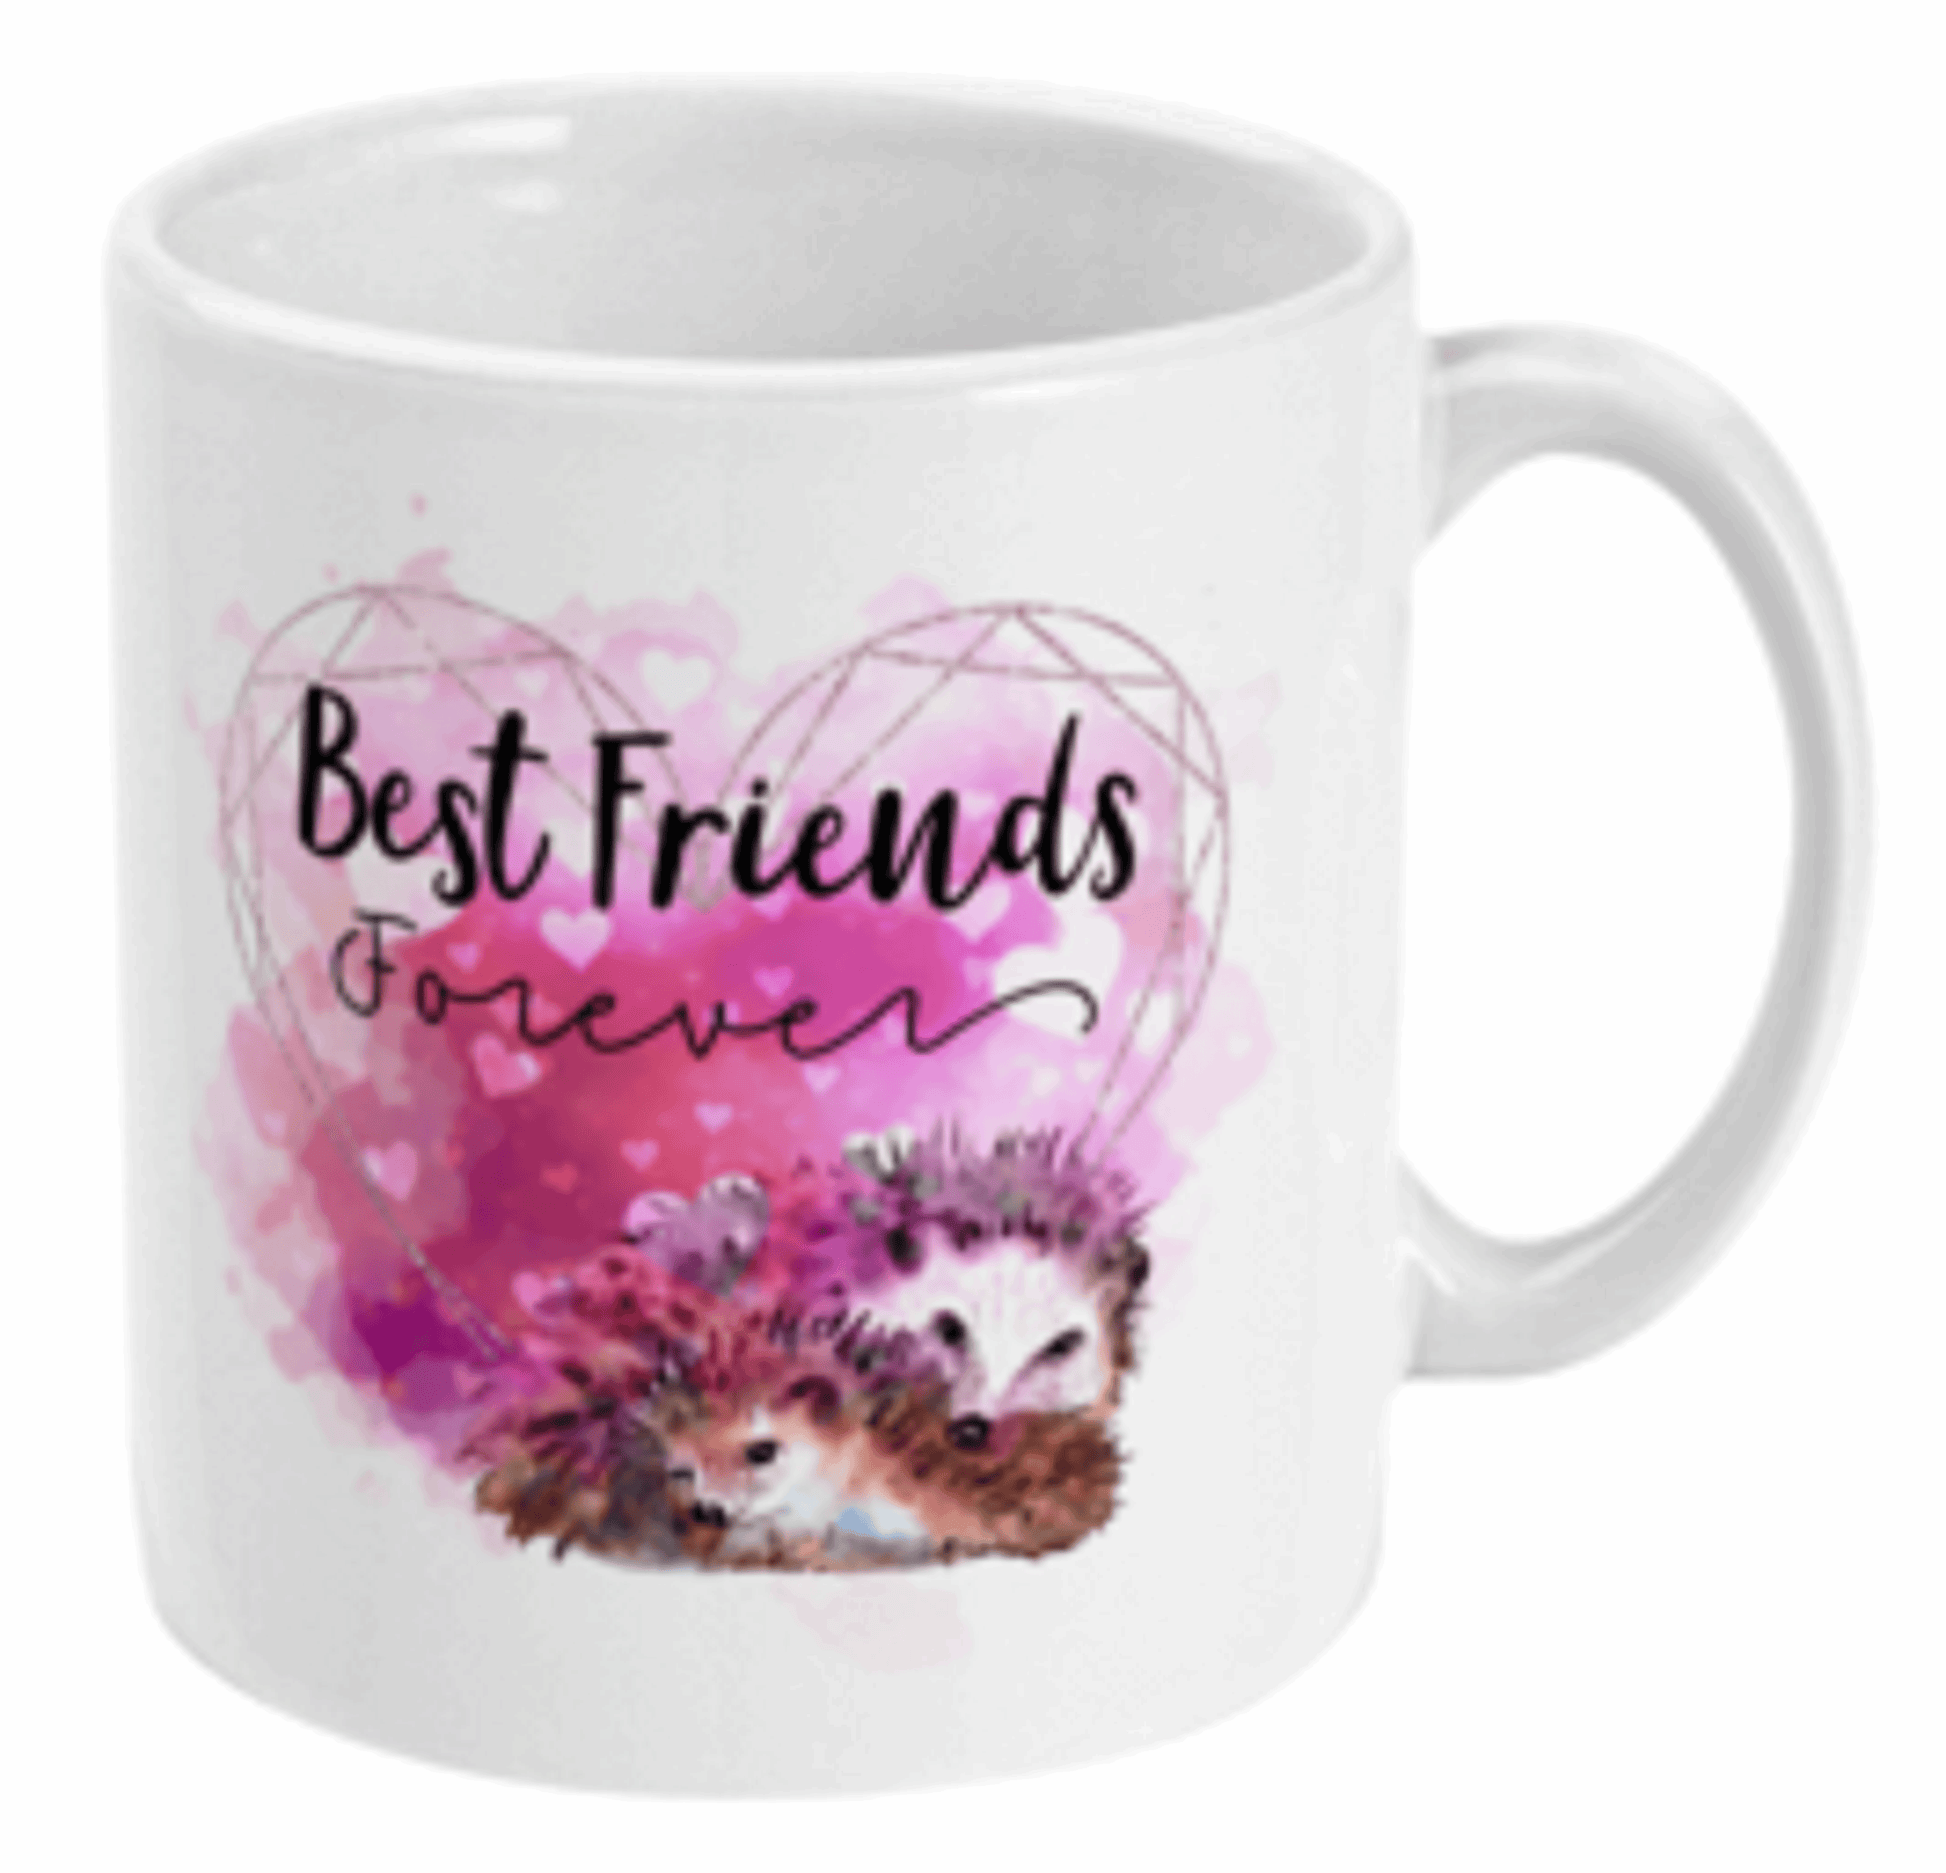  Best Friends Forever Hedgehogs Coffee Mug by Free Spirit Accessories sold by Free Spirit Accessories